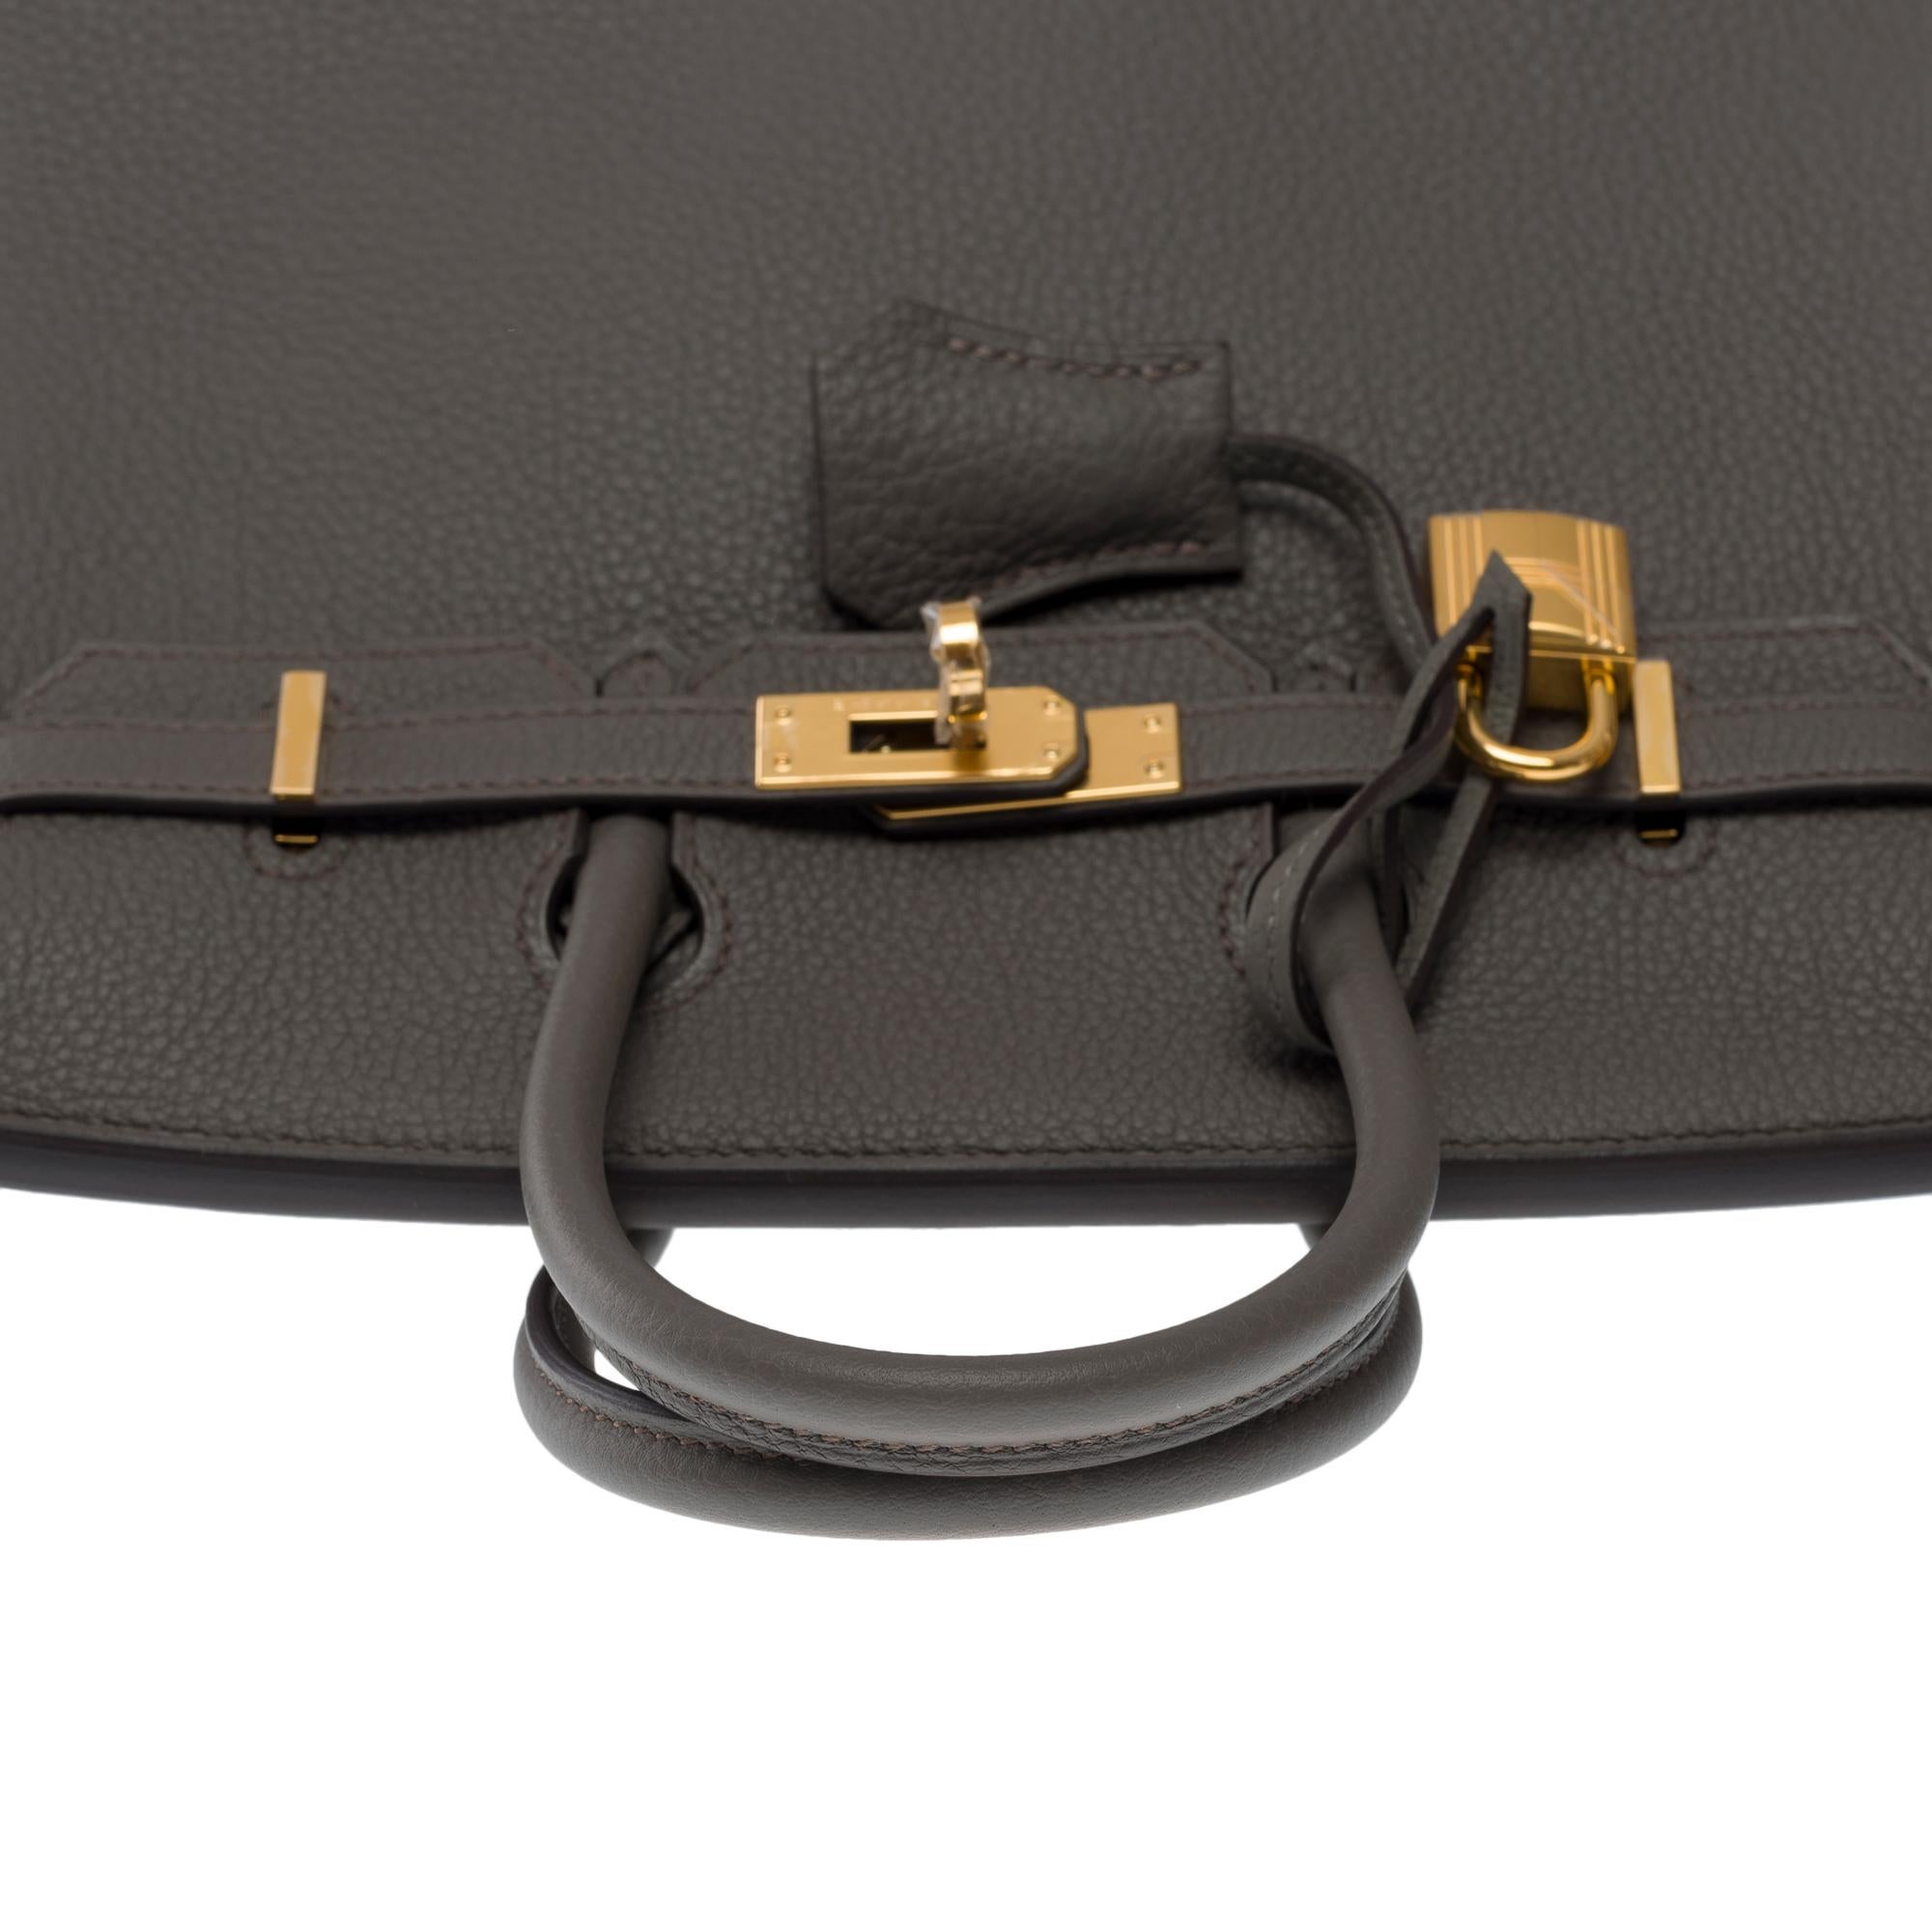 Fantastic New Hermes Birkin 25cm handbag in Etain Togo leather, GHW 5